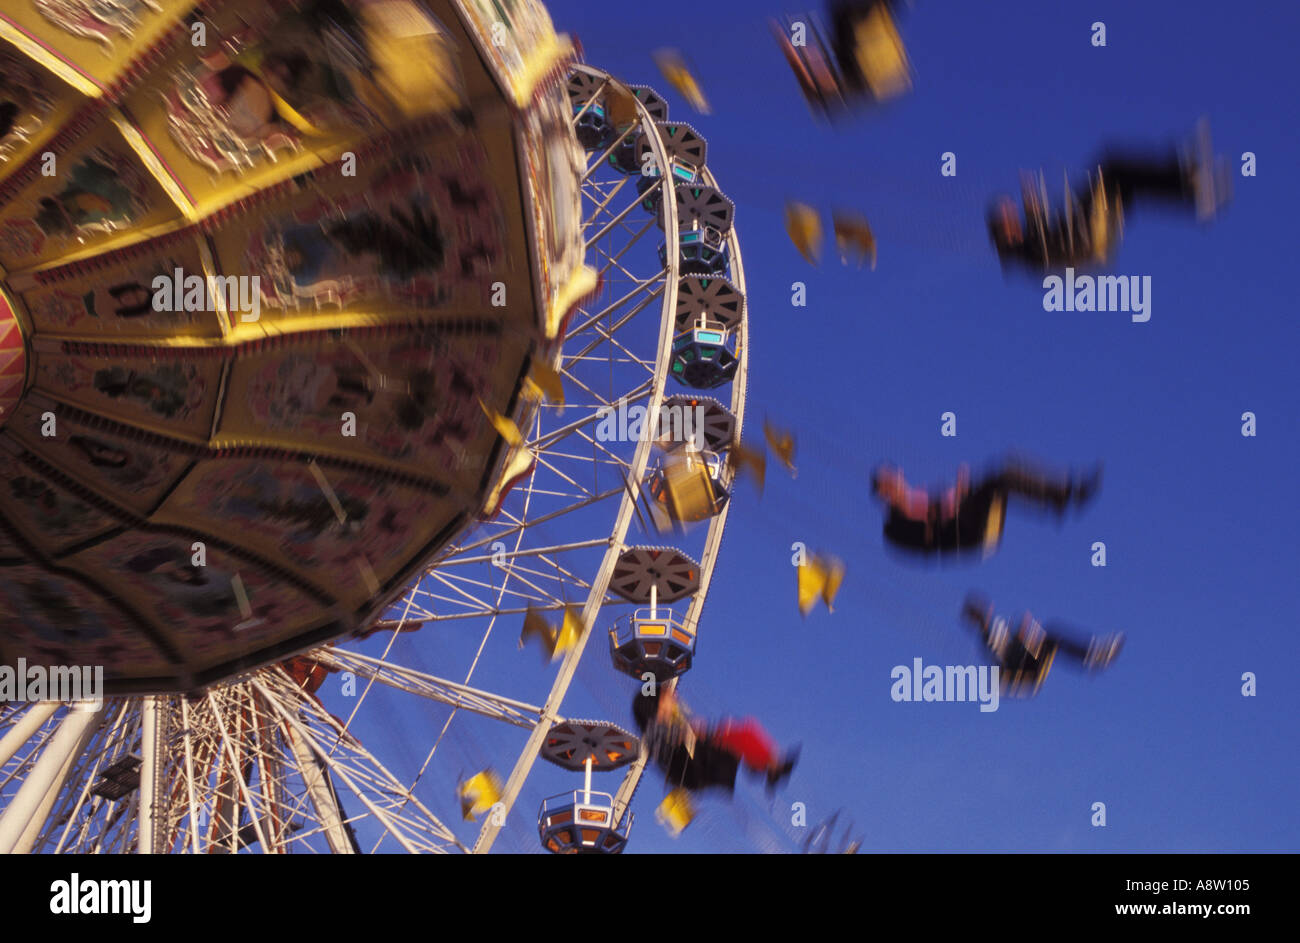 Amusement park fairground ride Stuttgart Germany Stock Photo